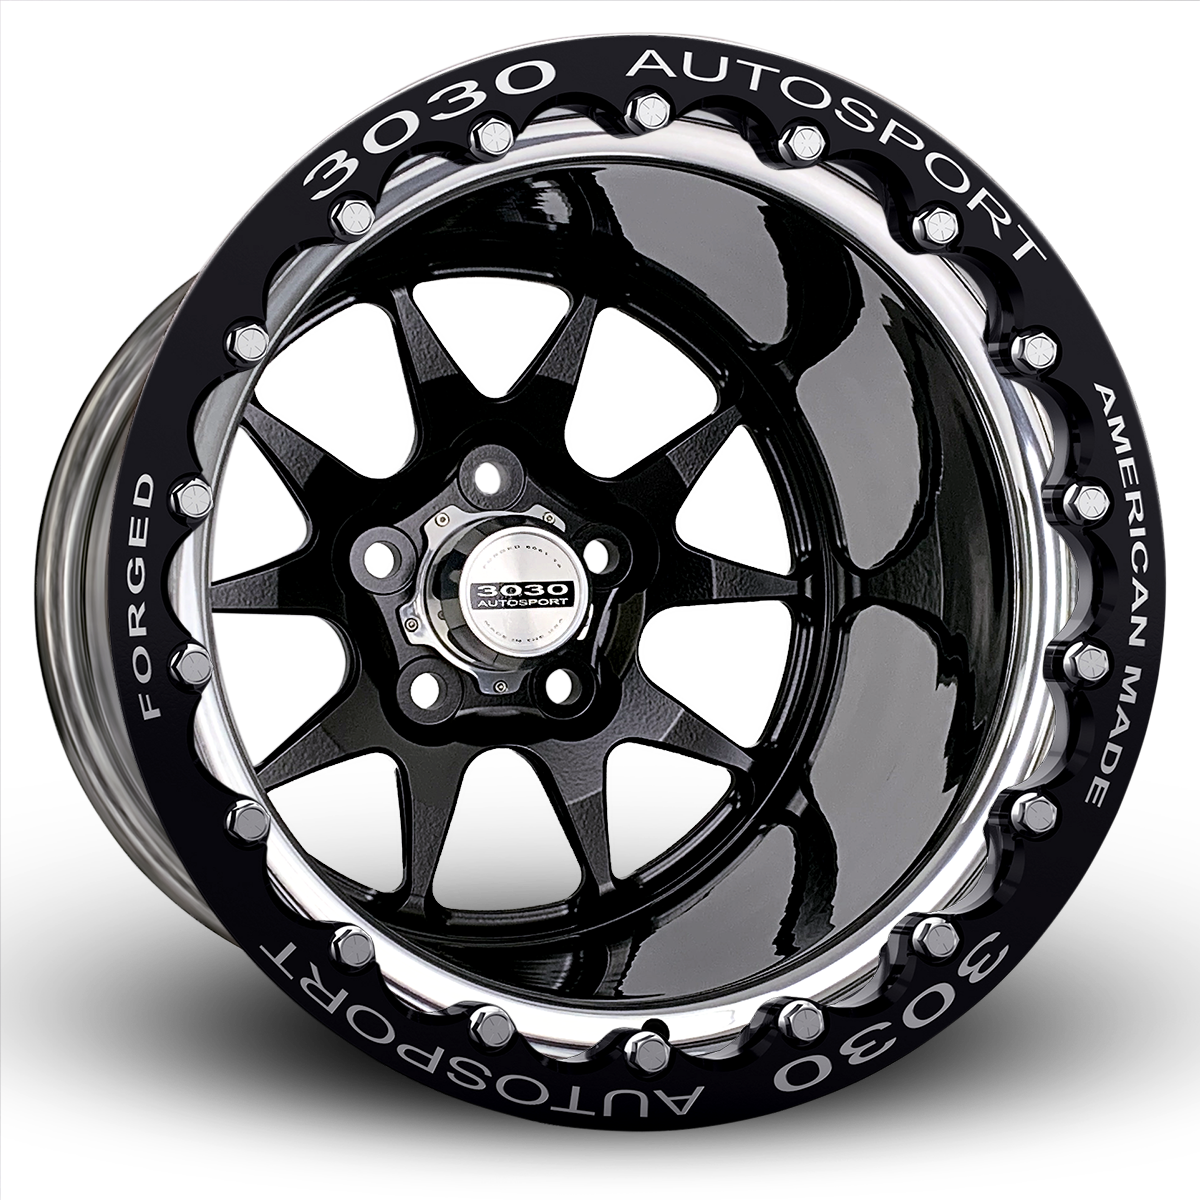 MACH-10 Single-Beadlock Wheel, Size: 15x12", Bolt Pattern: 5x4.75", Backspace: 6.500" [Black/Polished]